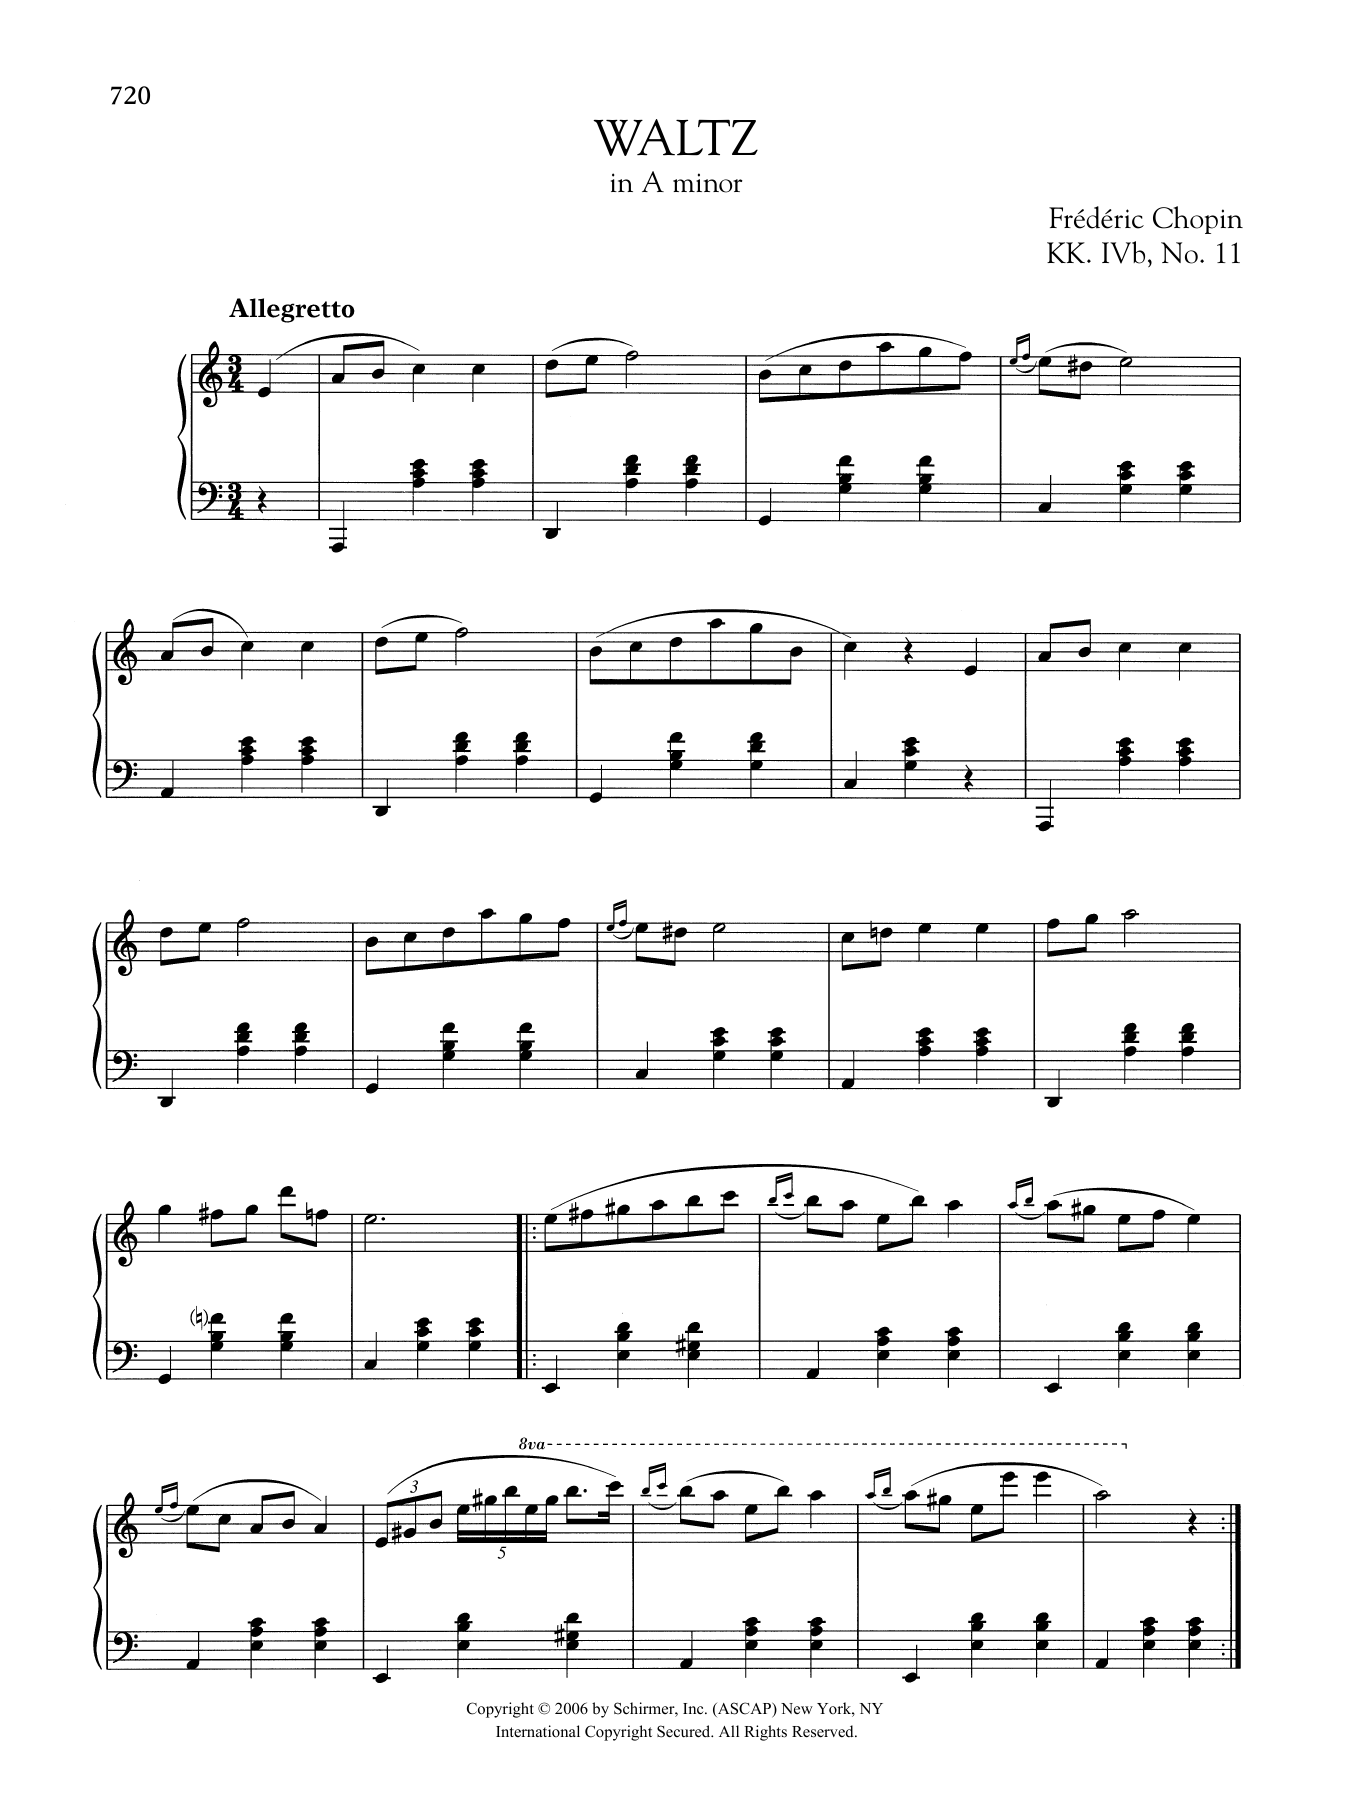 Waltz in A minor, KK. IVb, No. 11 sheet music